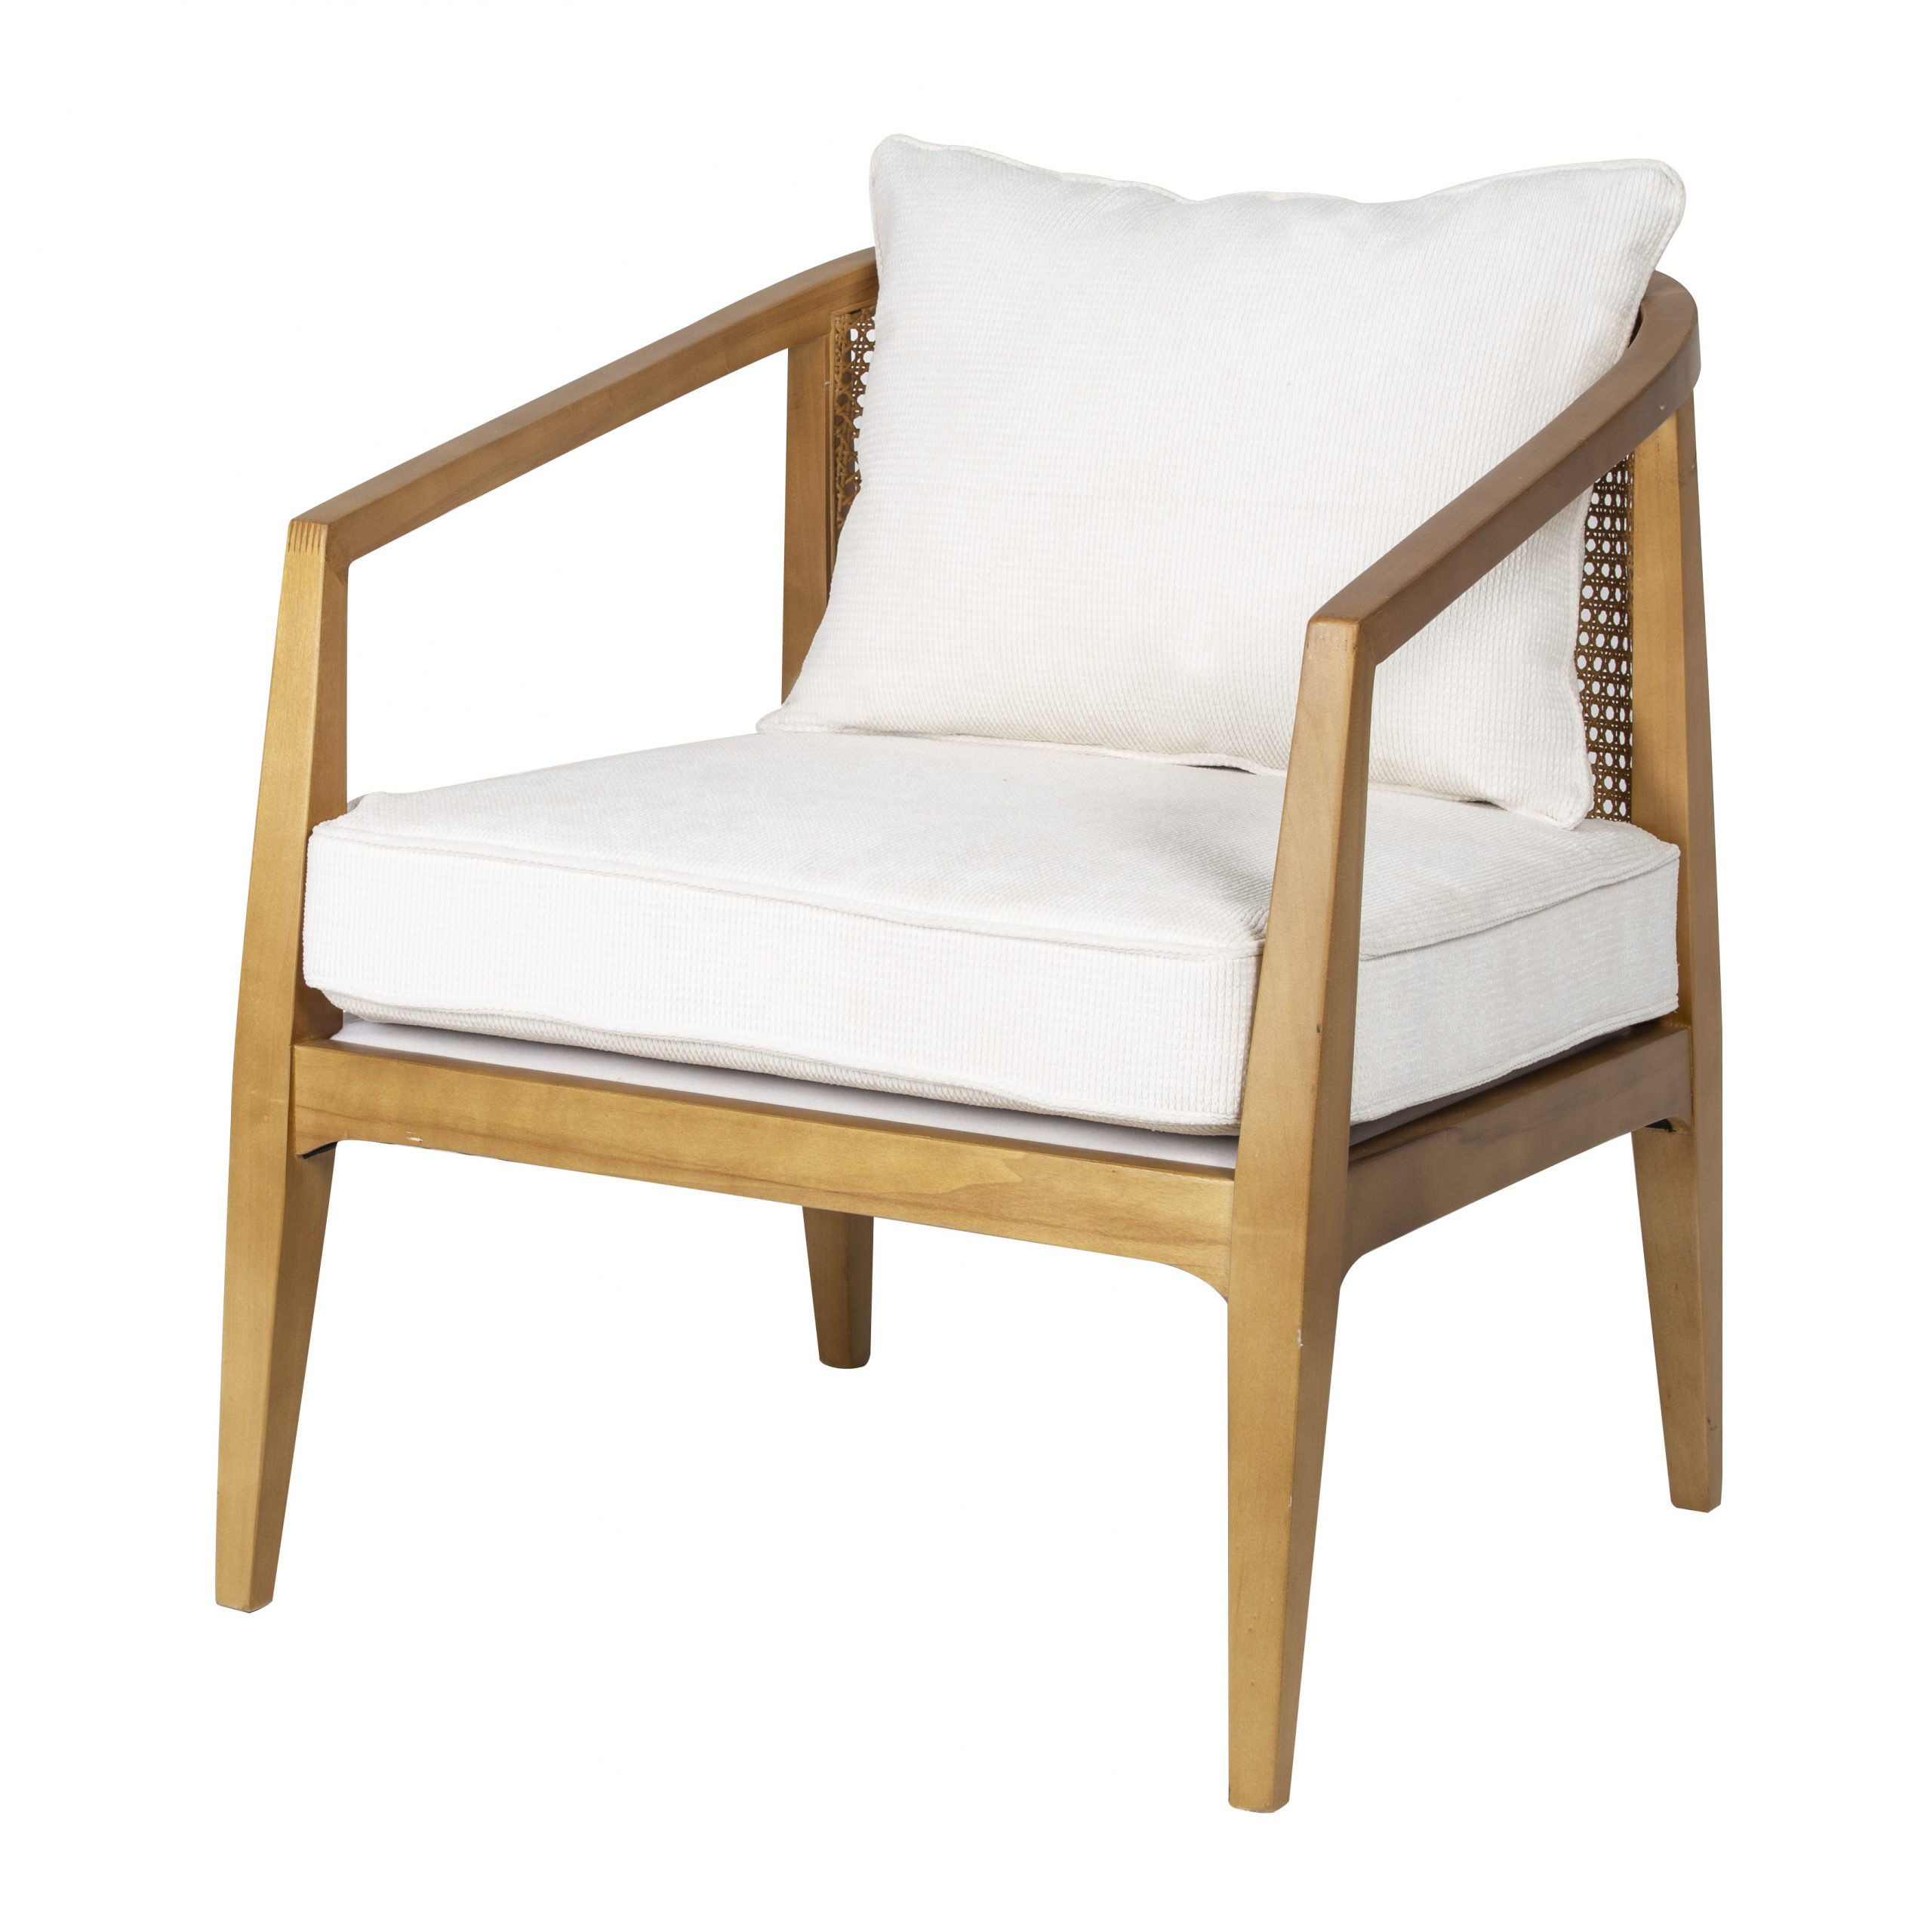 Chair Bayamo White/Natural W640 x D700 x H730mm